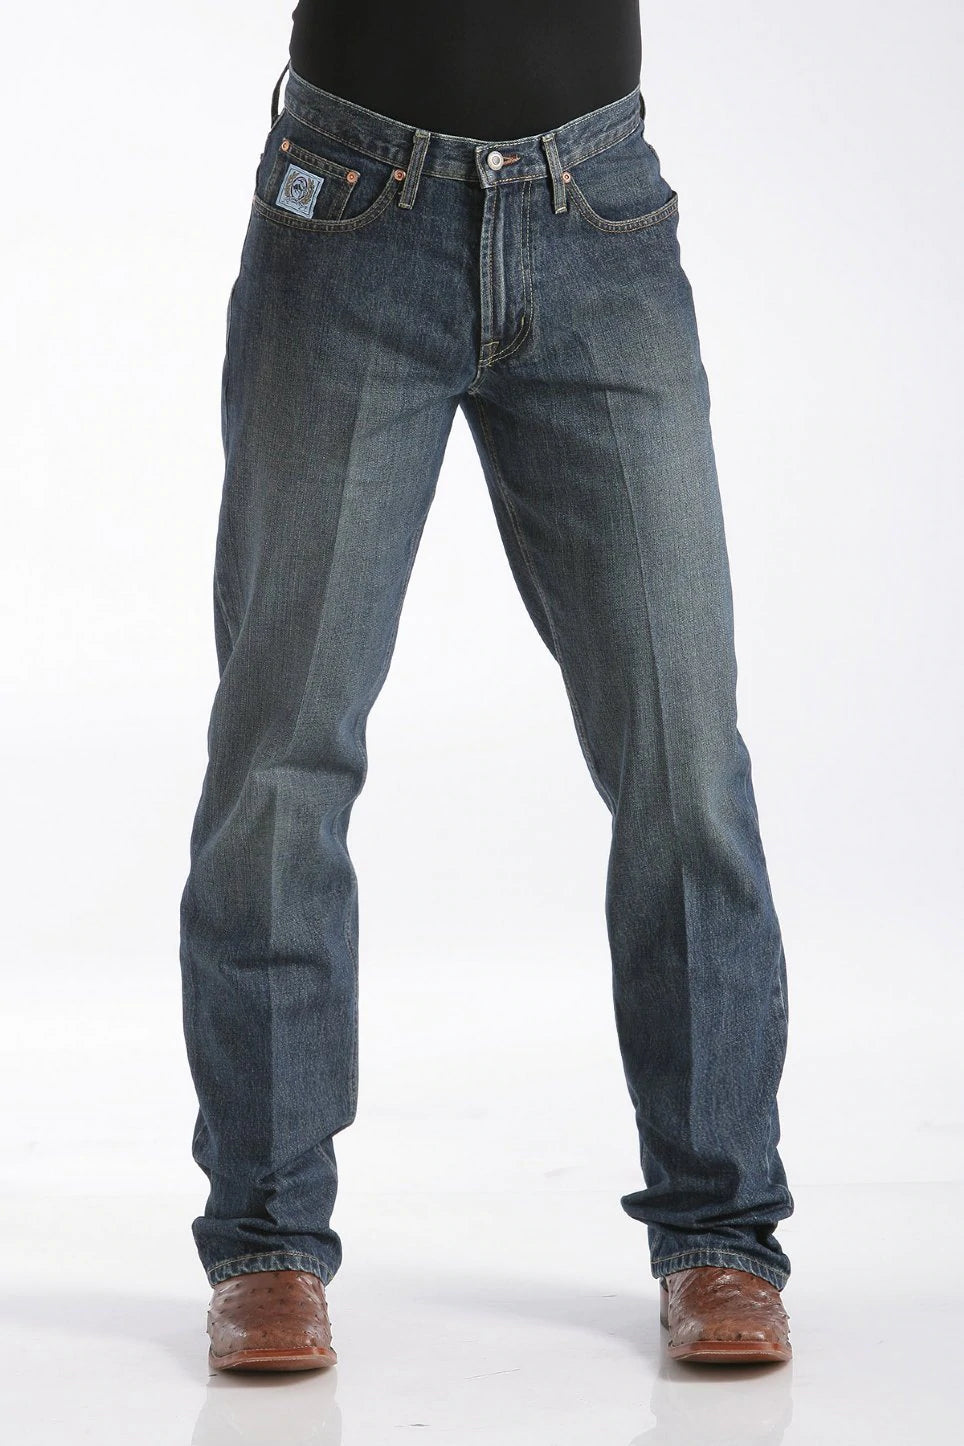 Cinch | Mens | Jeans | Straight | 34" | White Label | Dark